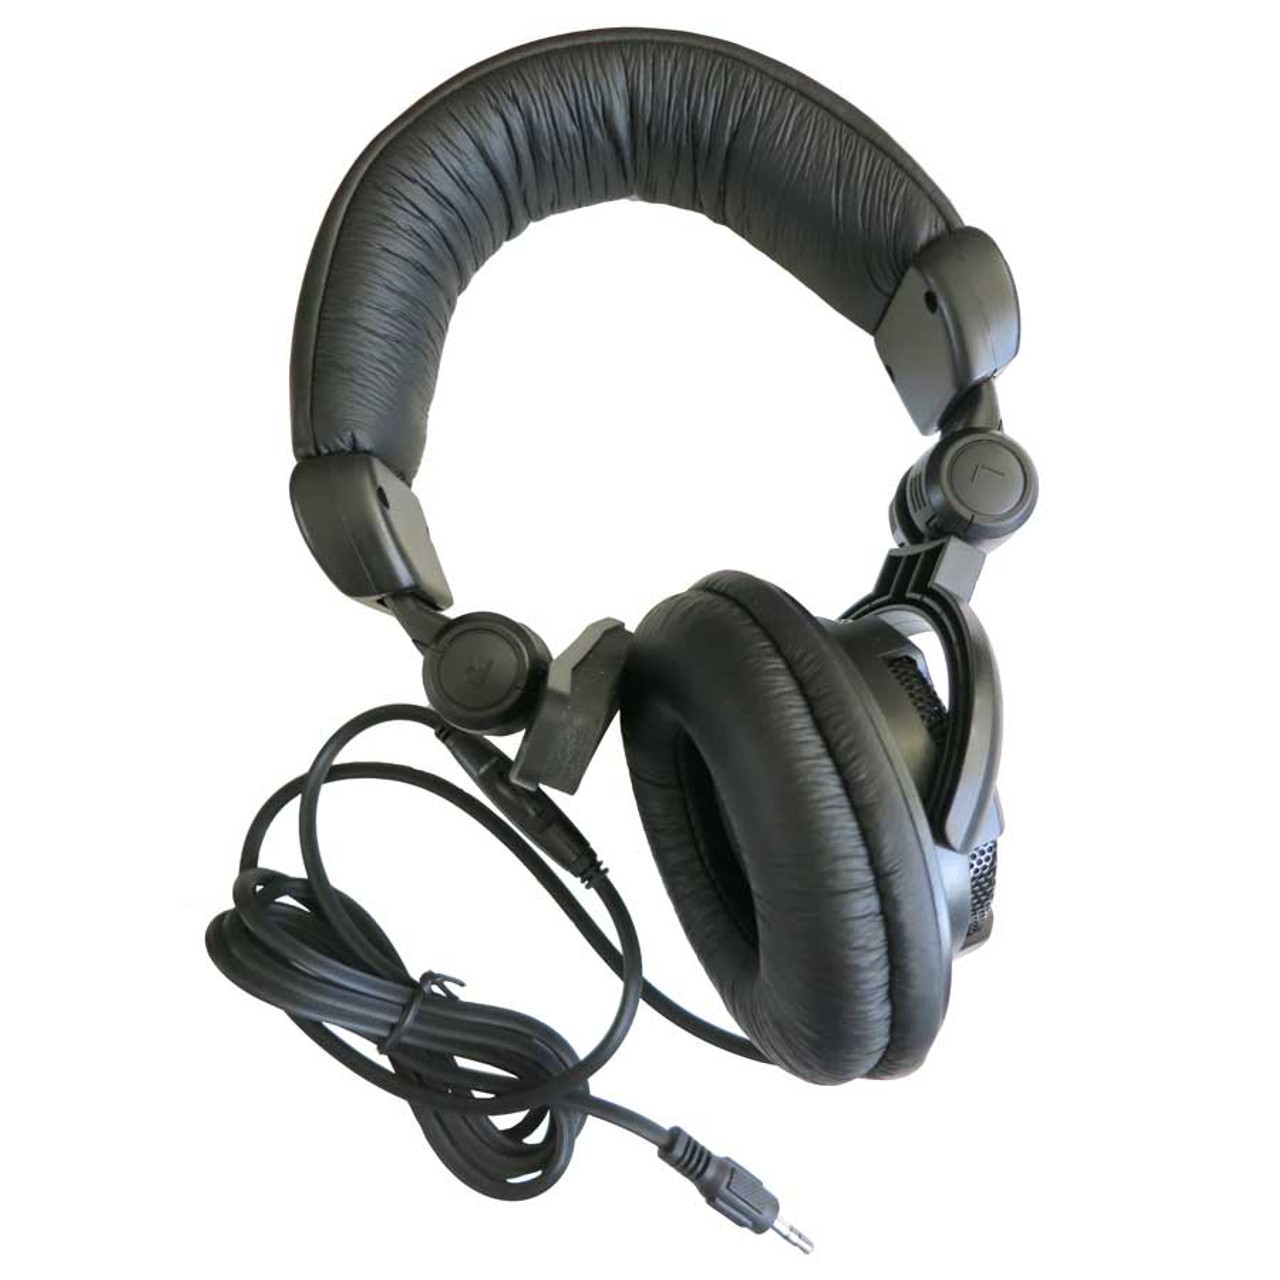 Single-Sided 1-BUD Headphone with an Adjustable Headband